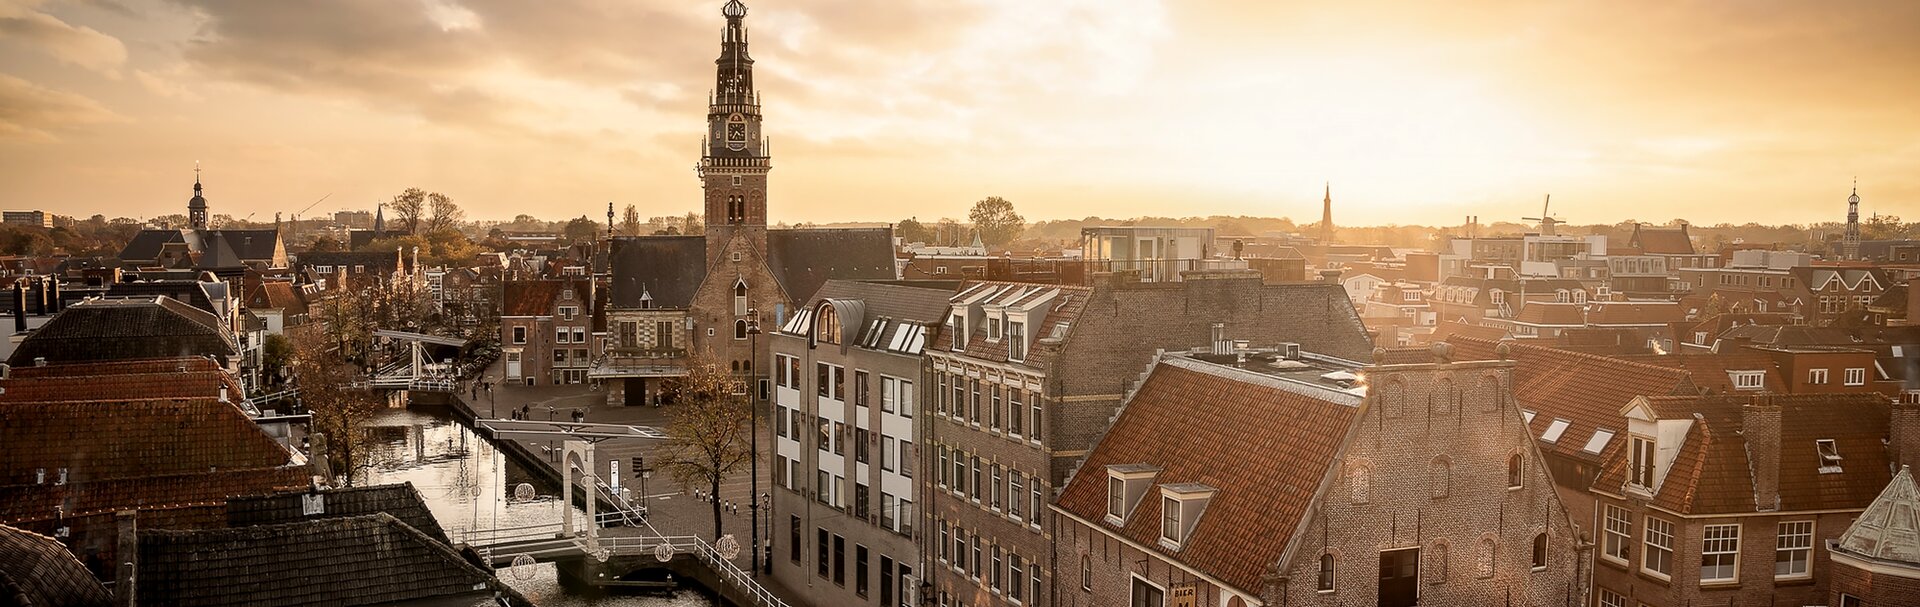 Discover Alkmaar Splendid City!